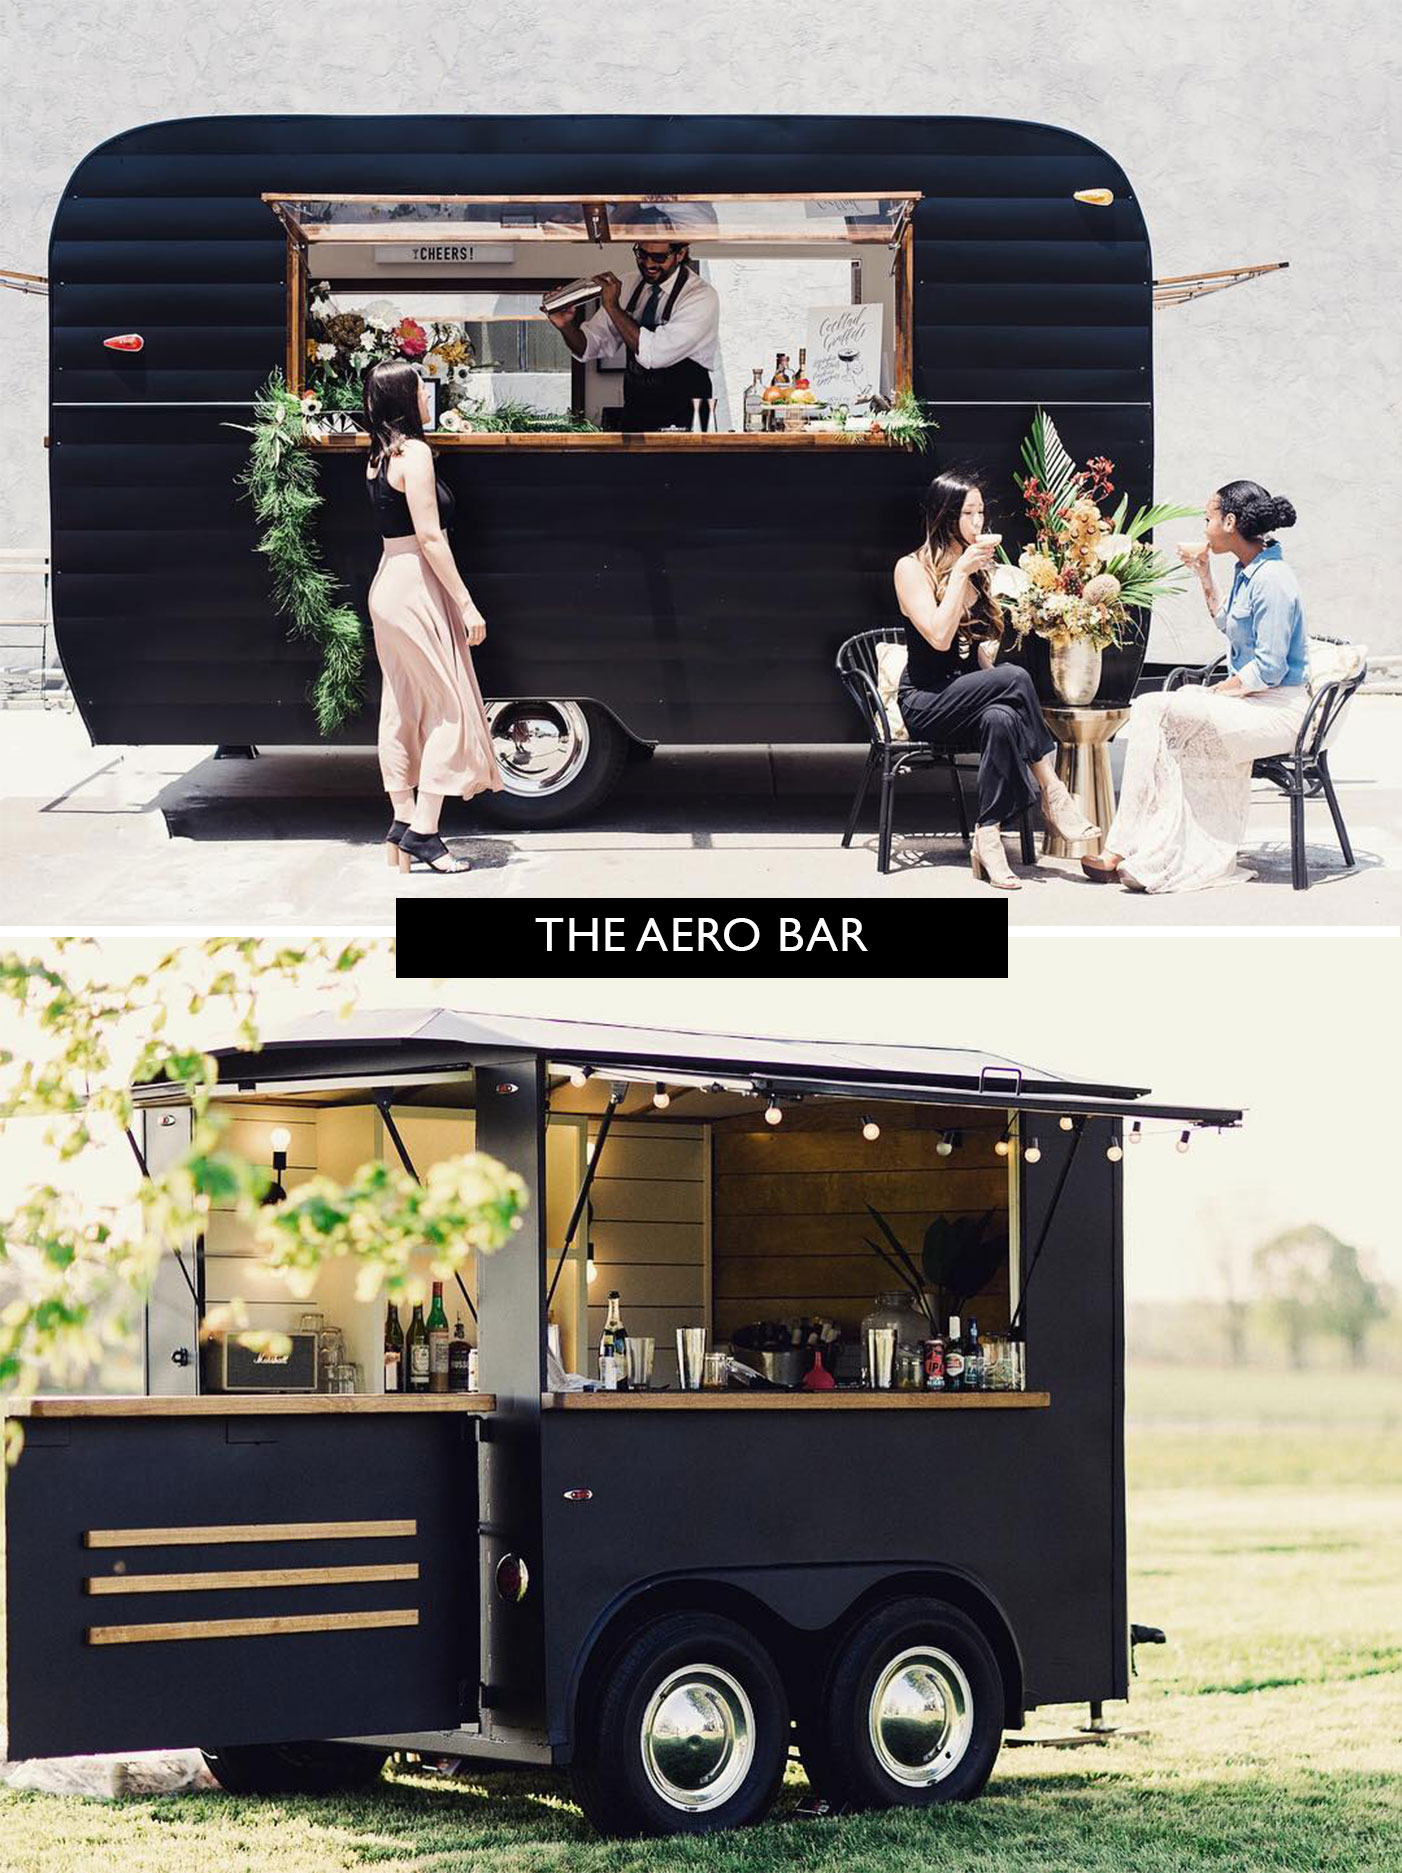 The Aero Bar